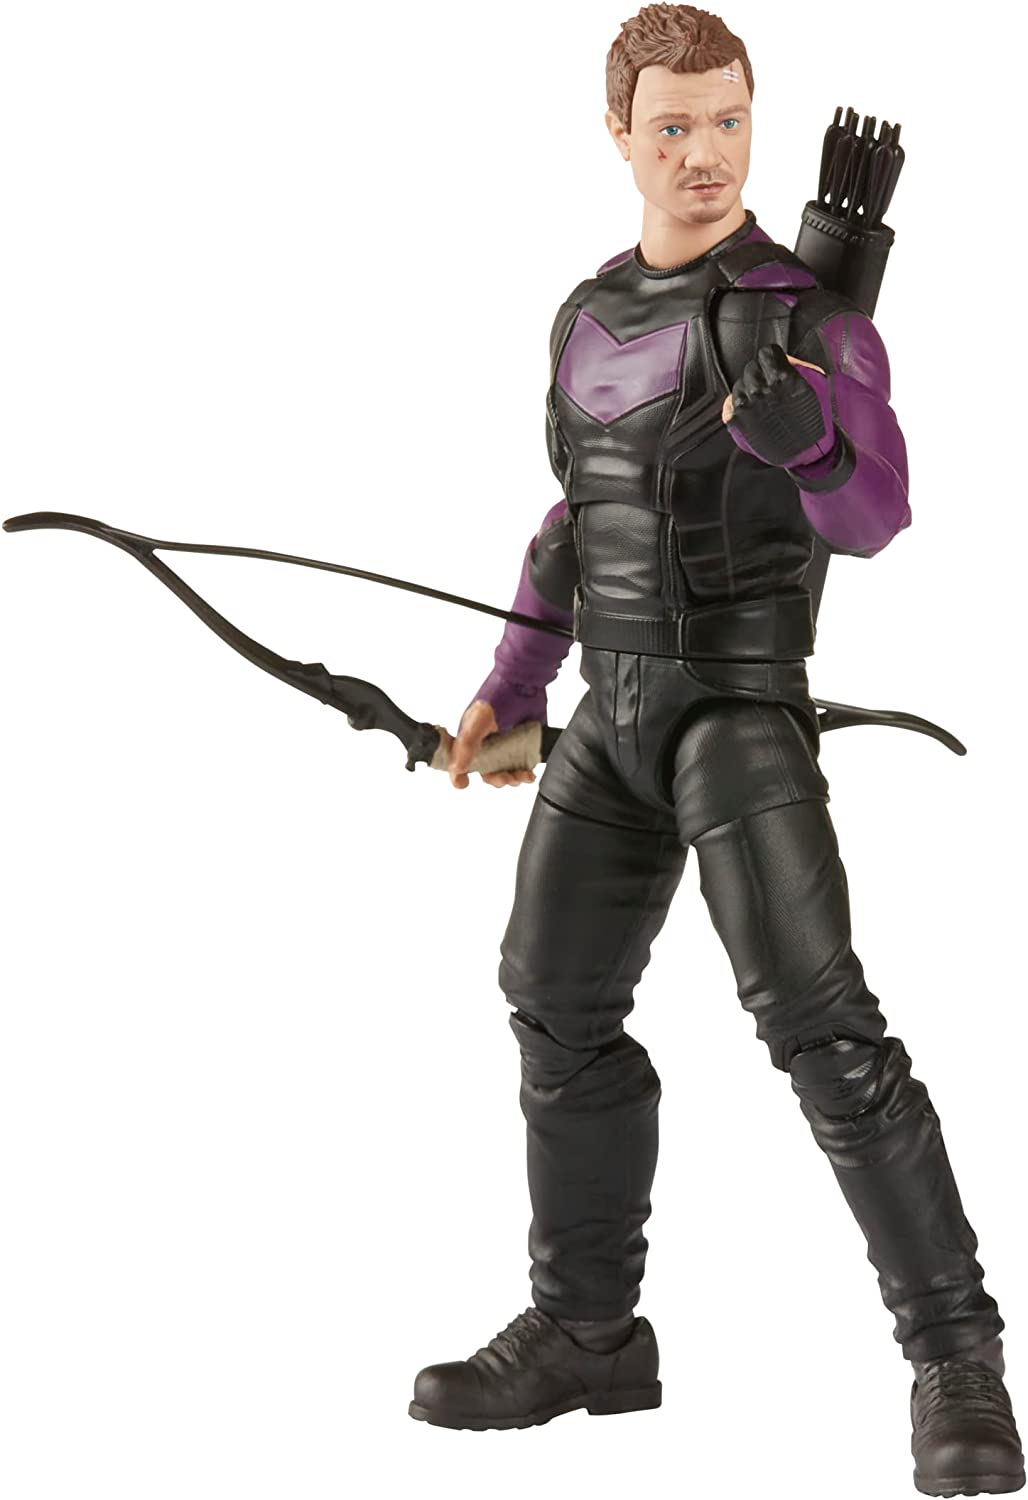 Avengers Marvel Legends Hawkeye Clint Barton Action Figure Product Image